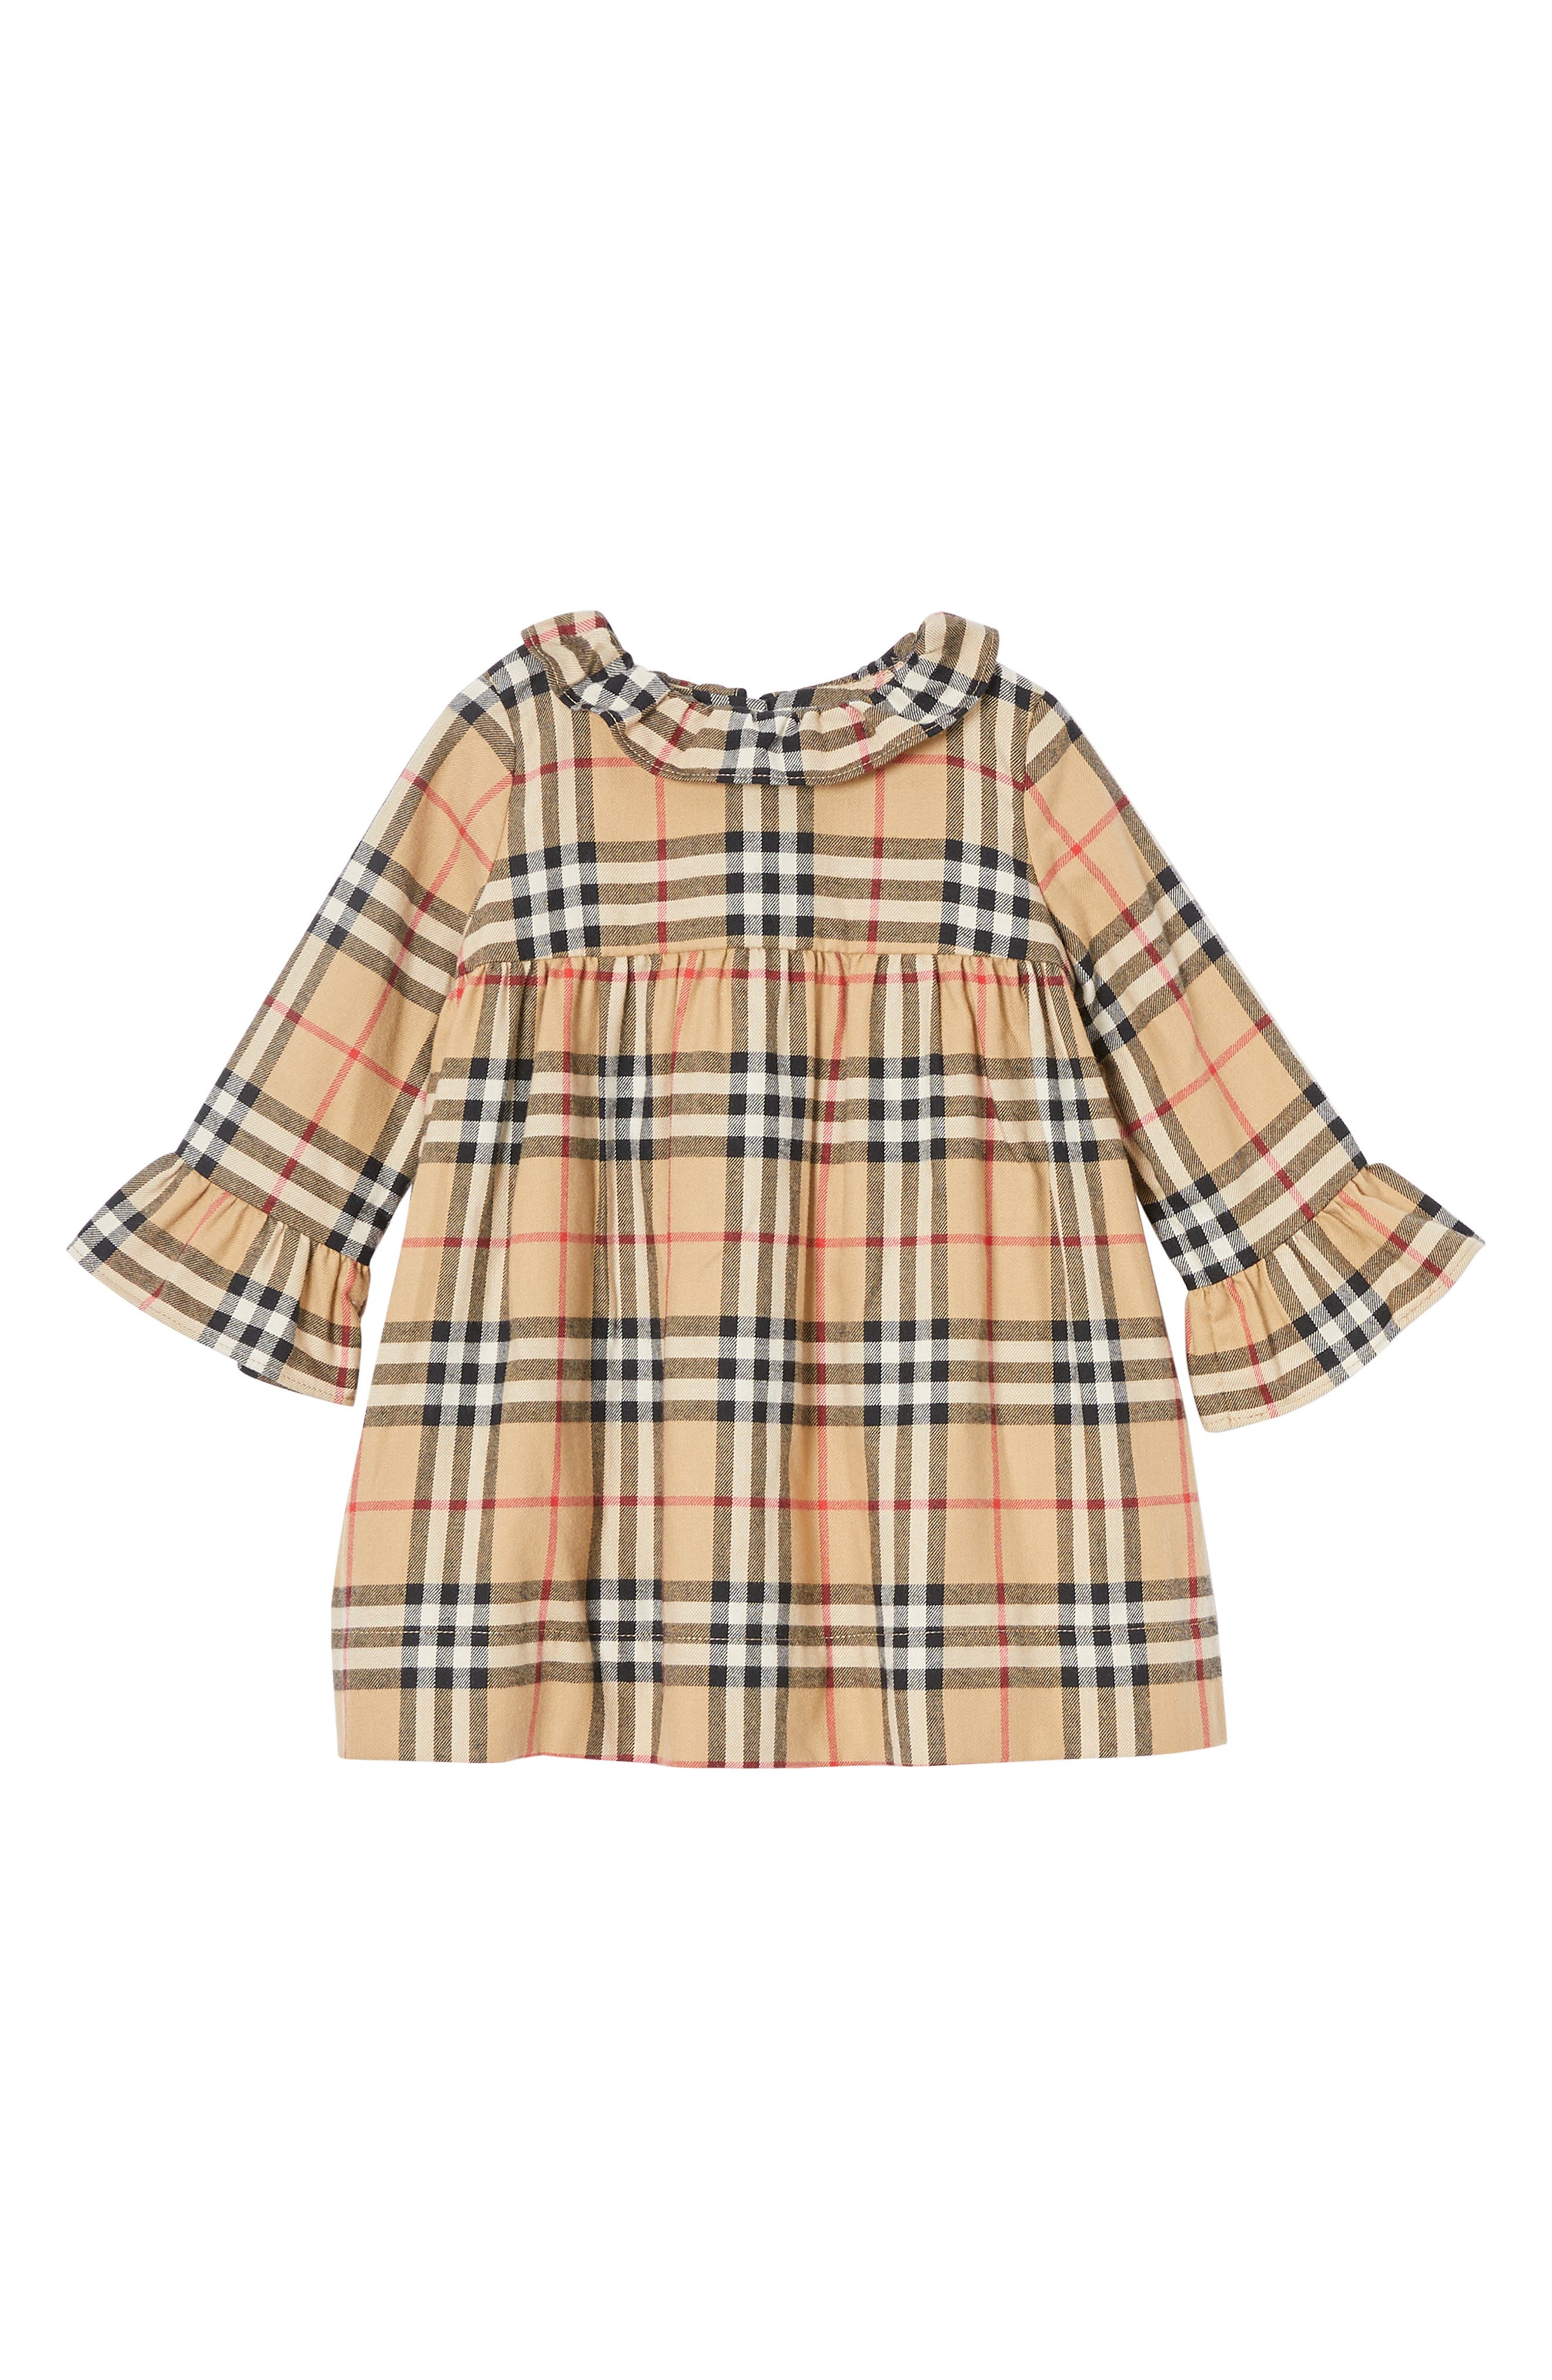 burberry toddler girl dress